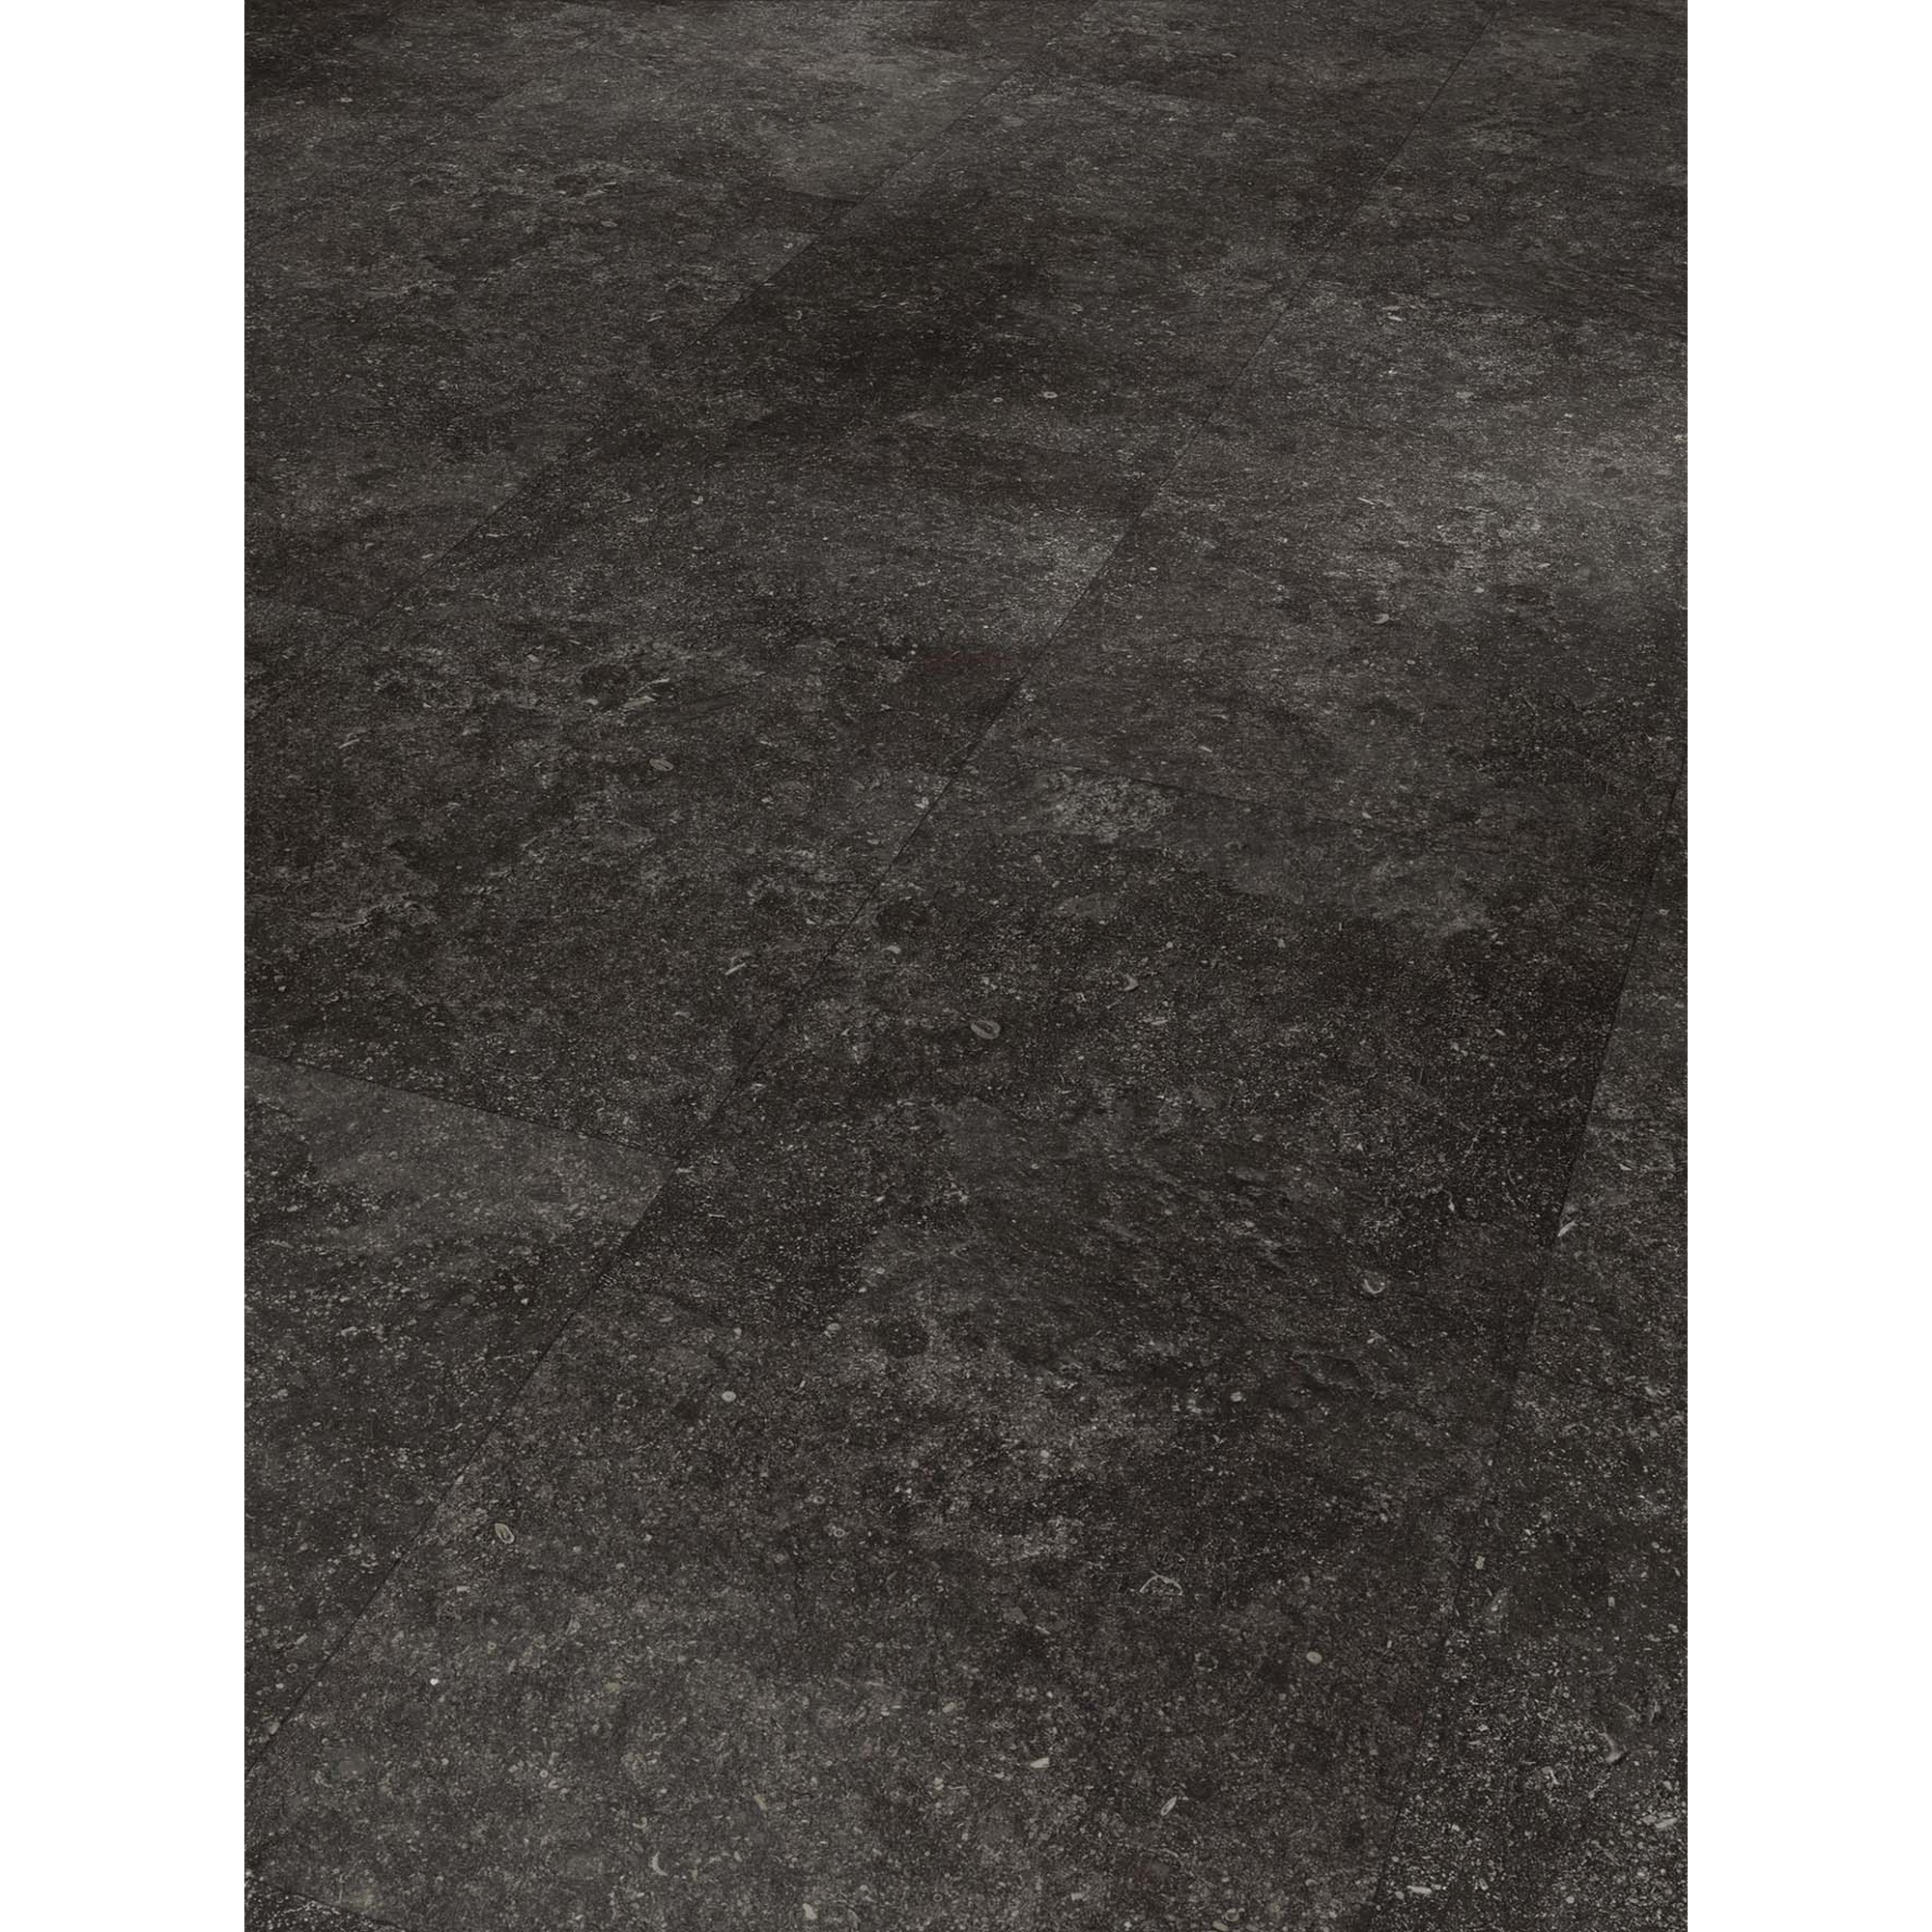 Vinylboden 'Modular ONE' Granit anthrazit 8 mm + product picture